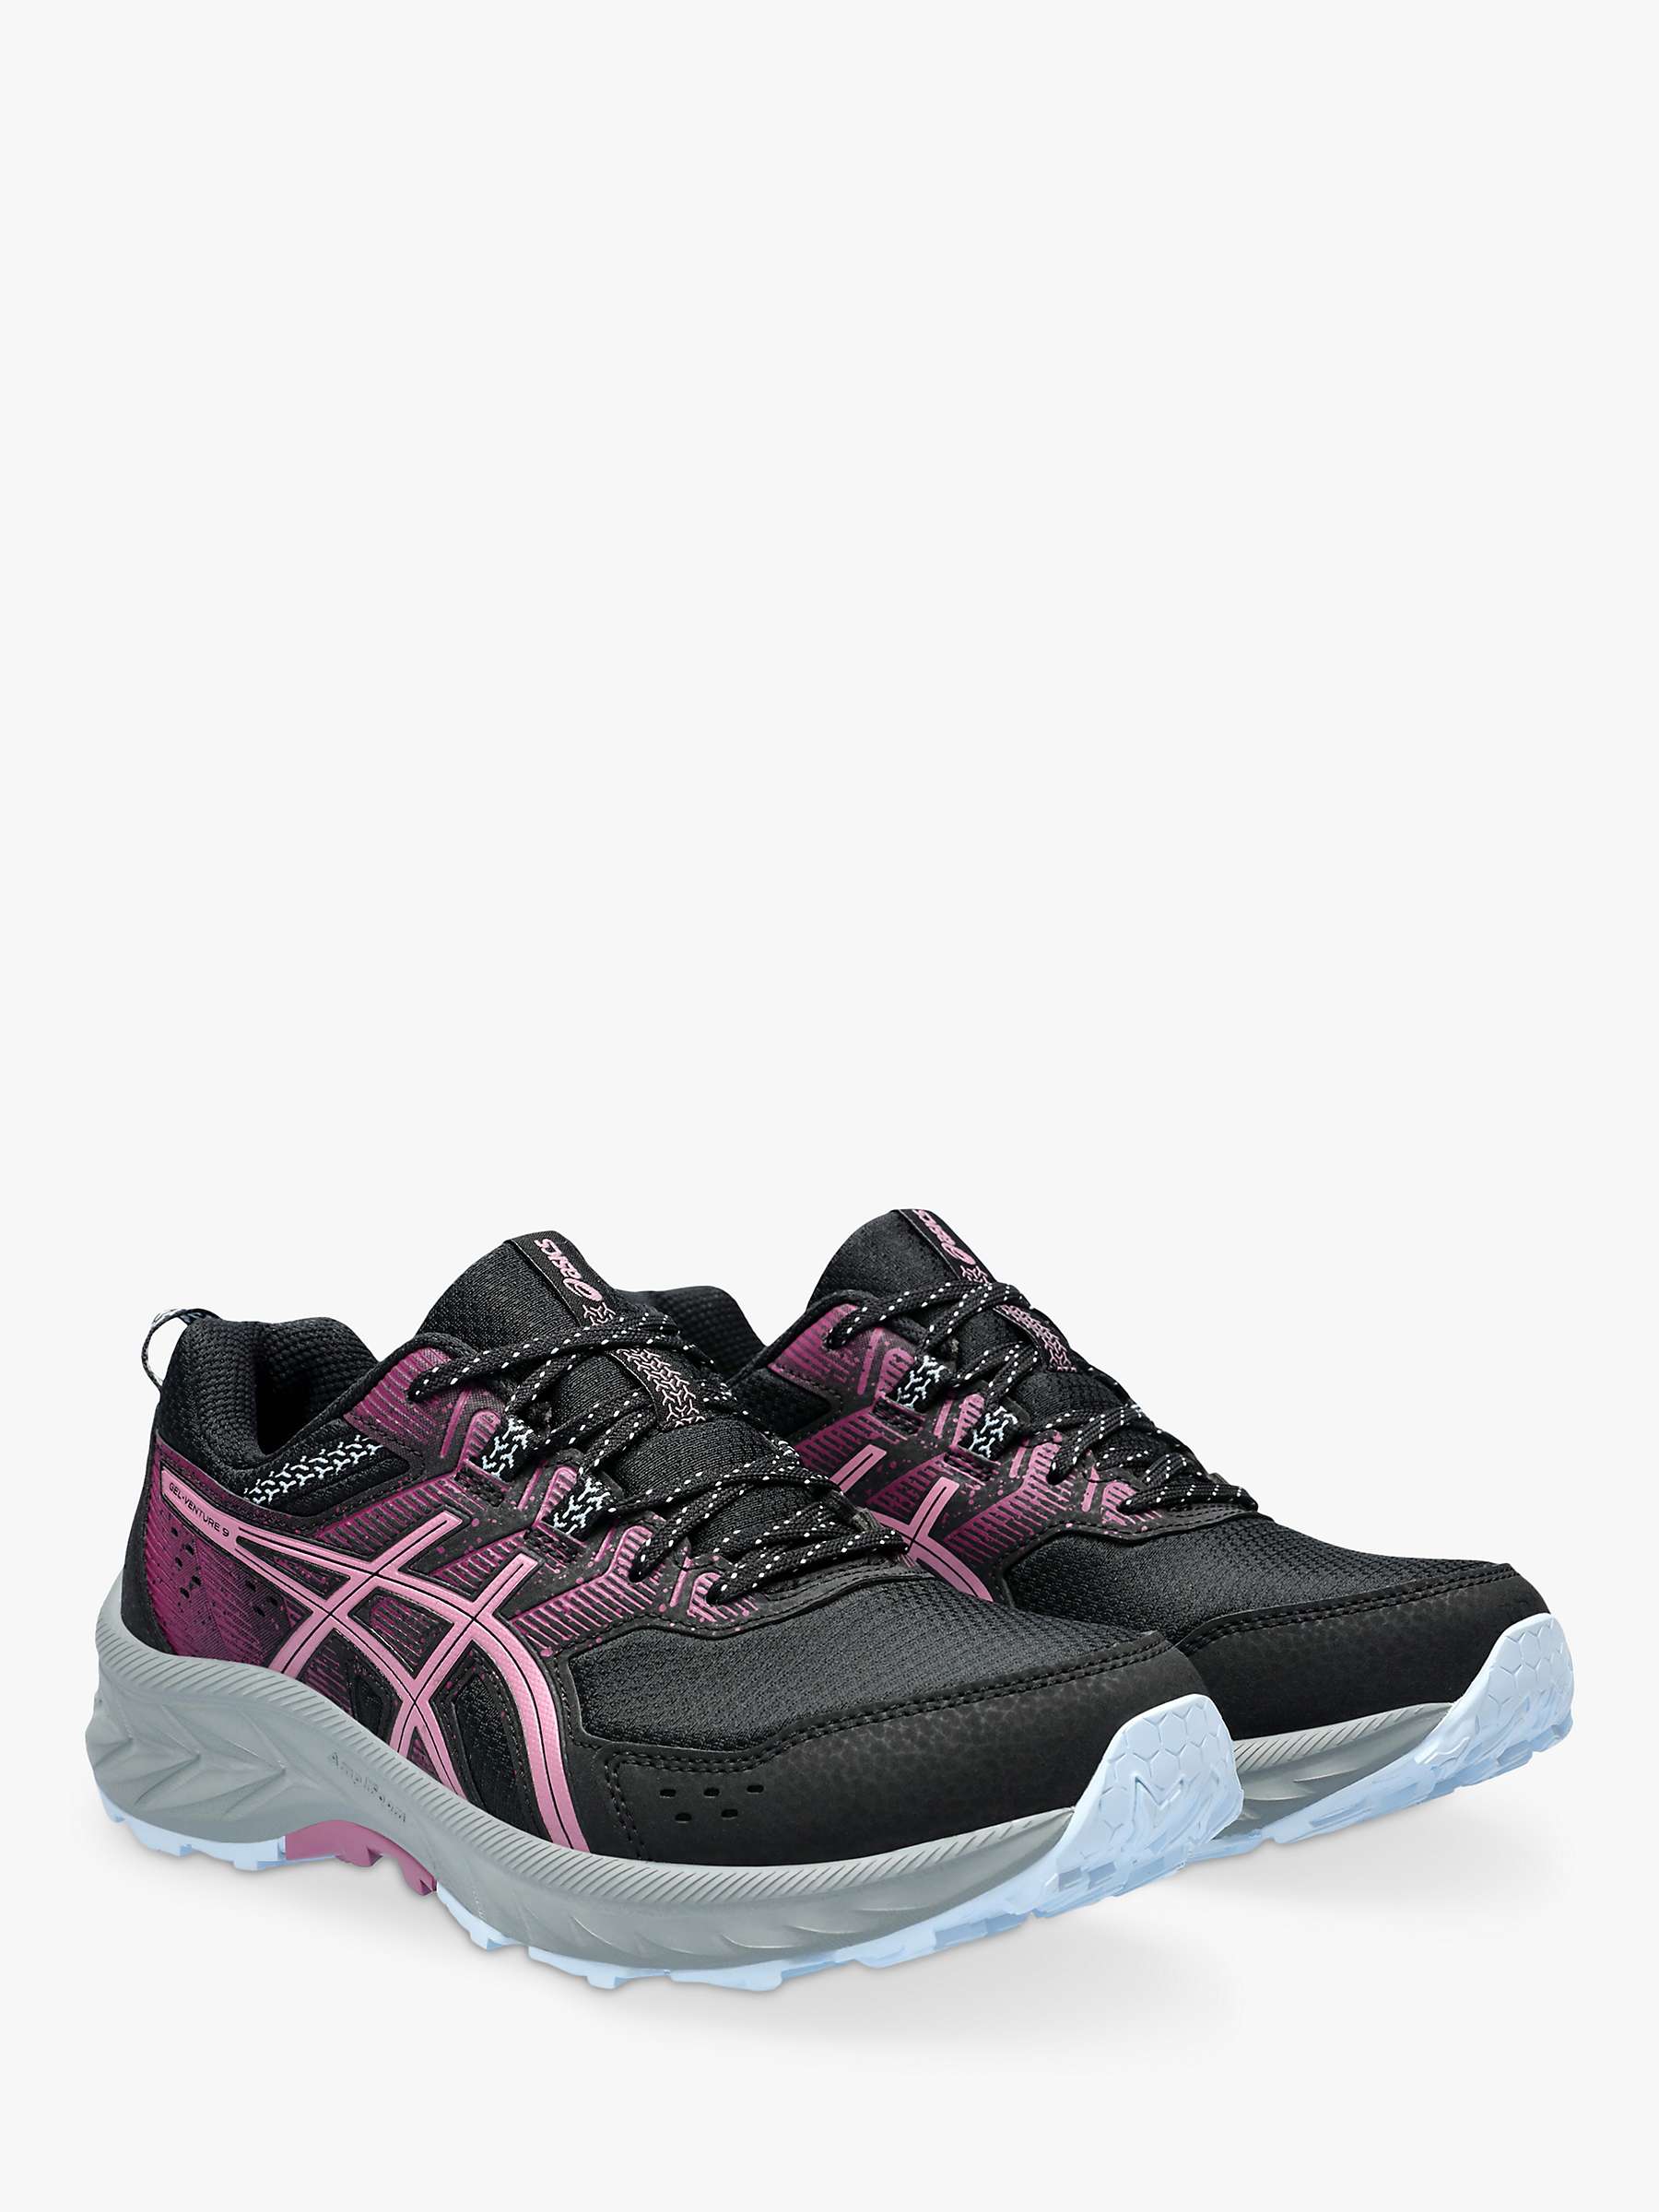 Buy ASICS GEL-VENTURE 9 Women's Trail Running Shoes, Black/Berry Online at johnlewis.com